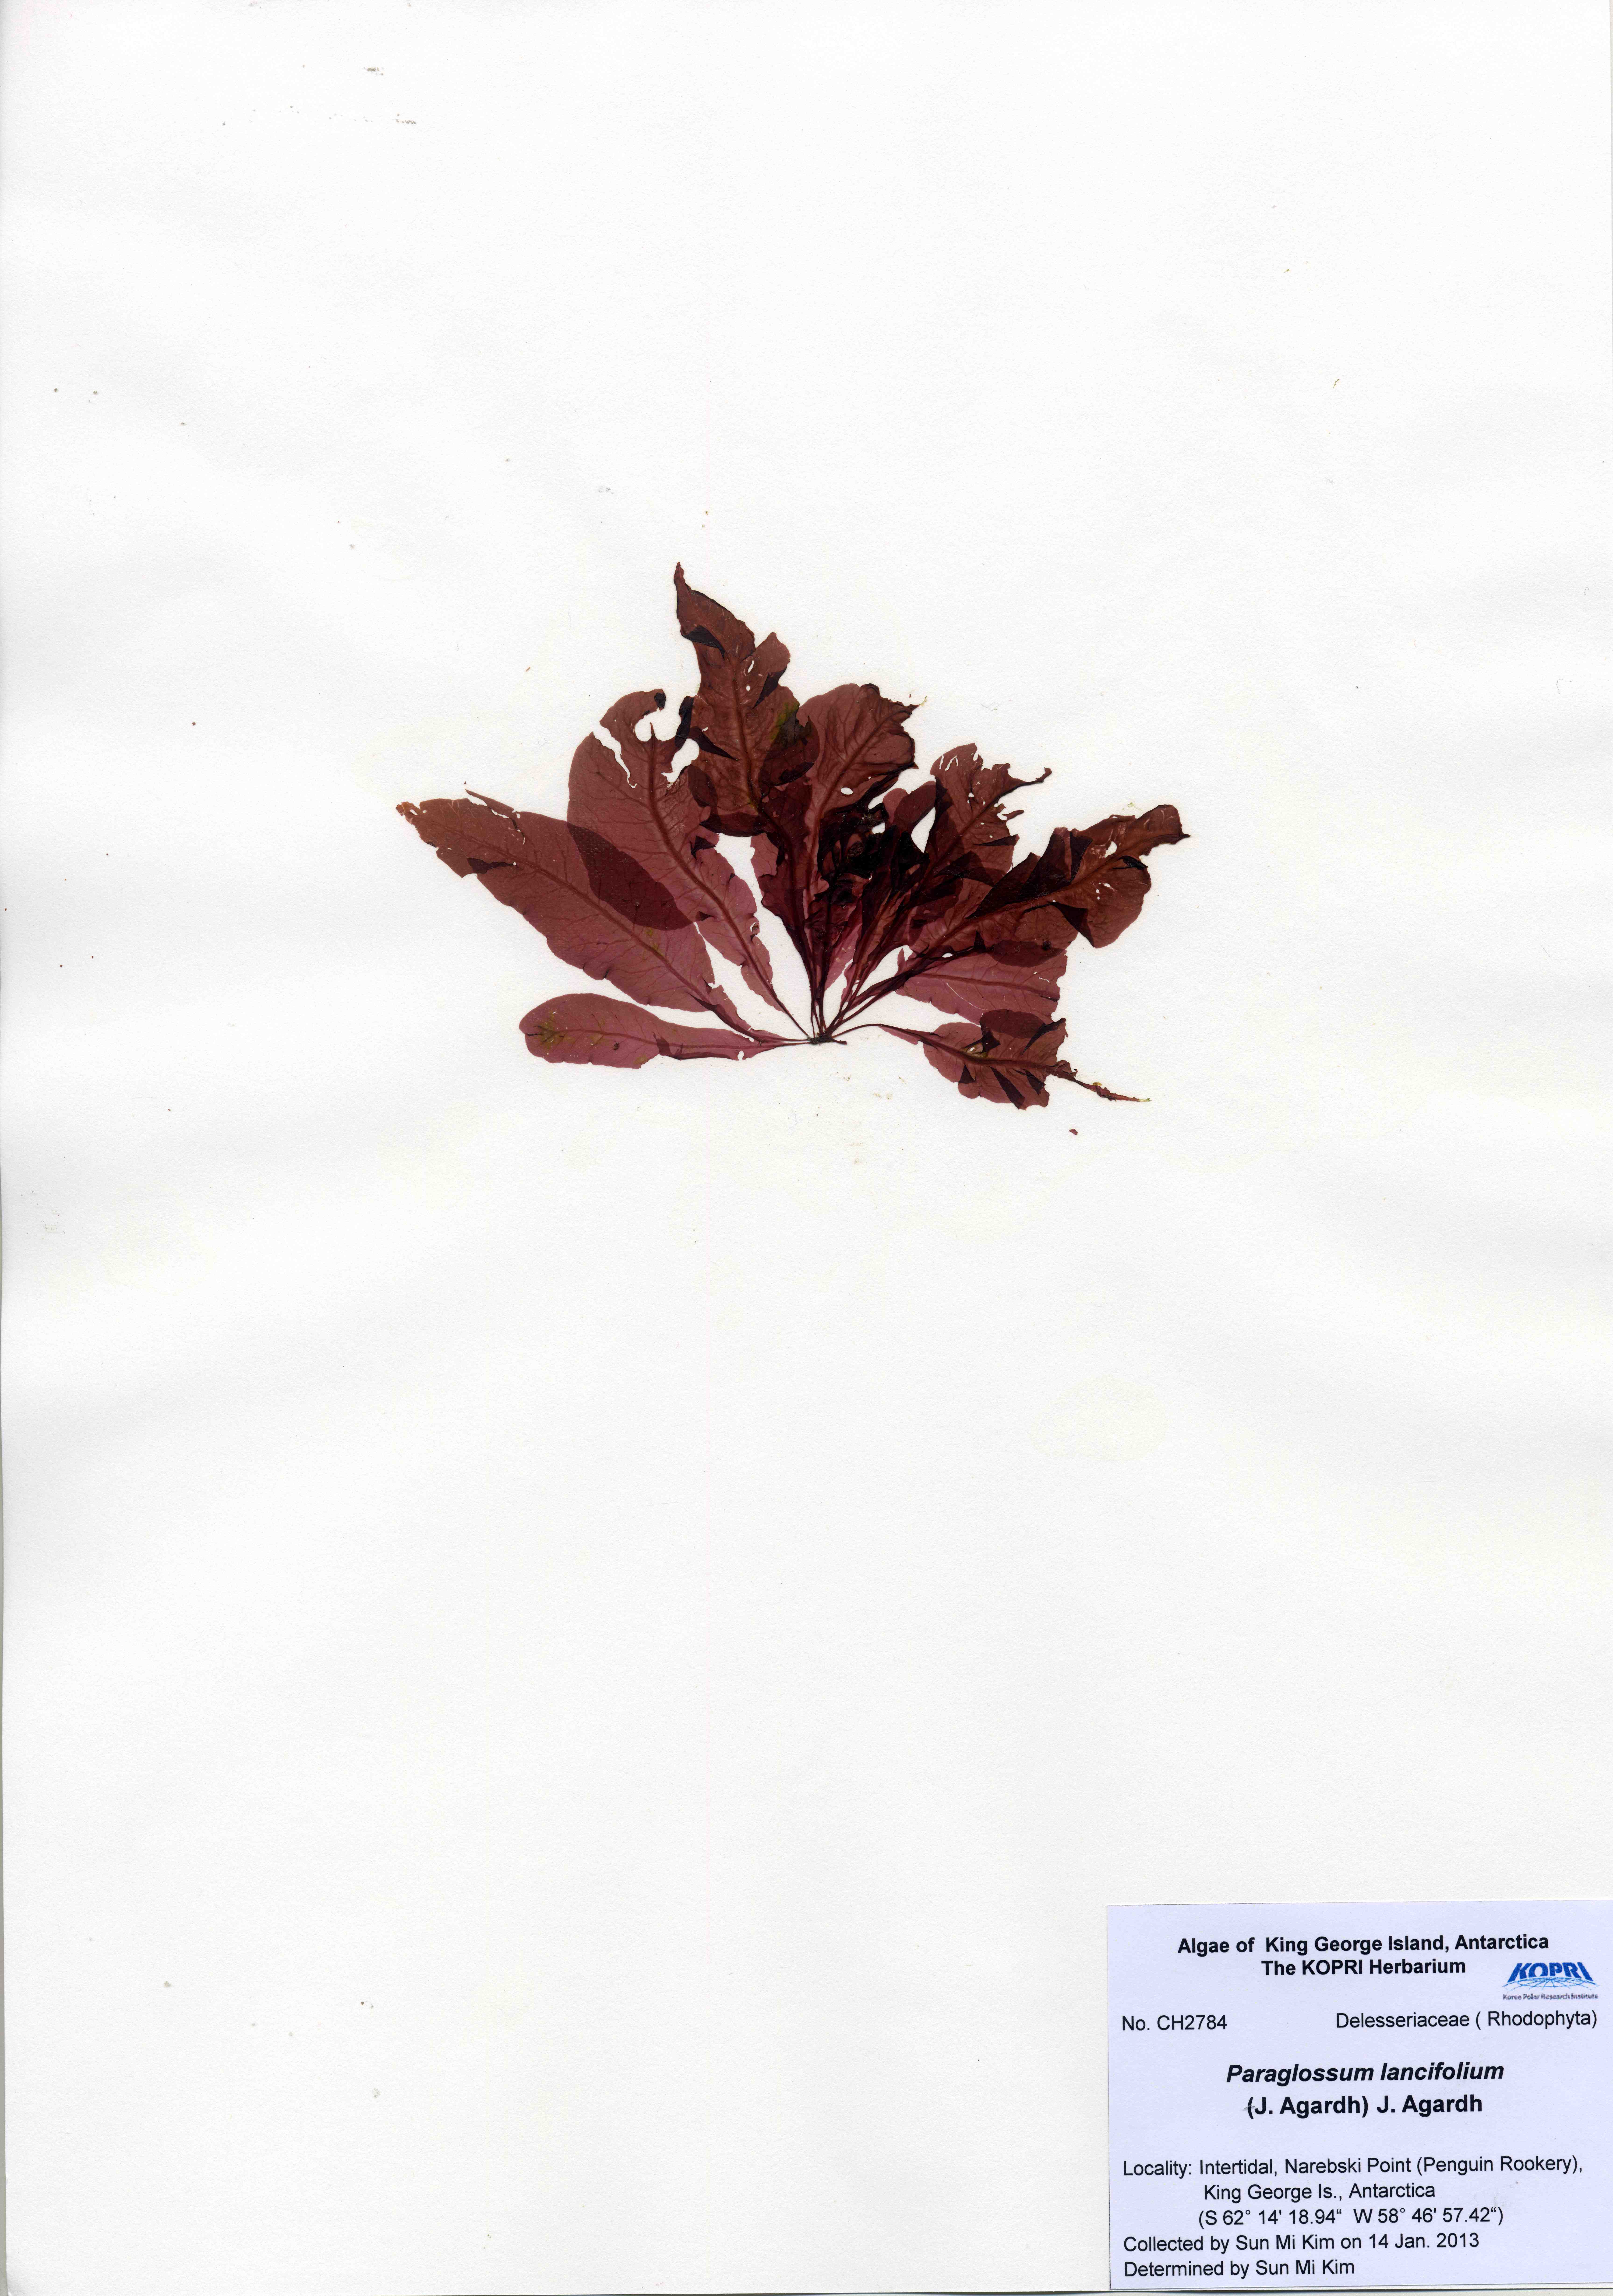 Paraglossum lancifolium (J.agardh) J.agardh